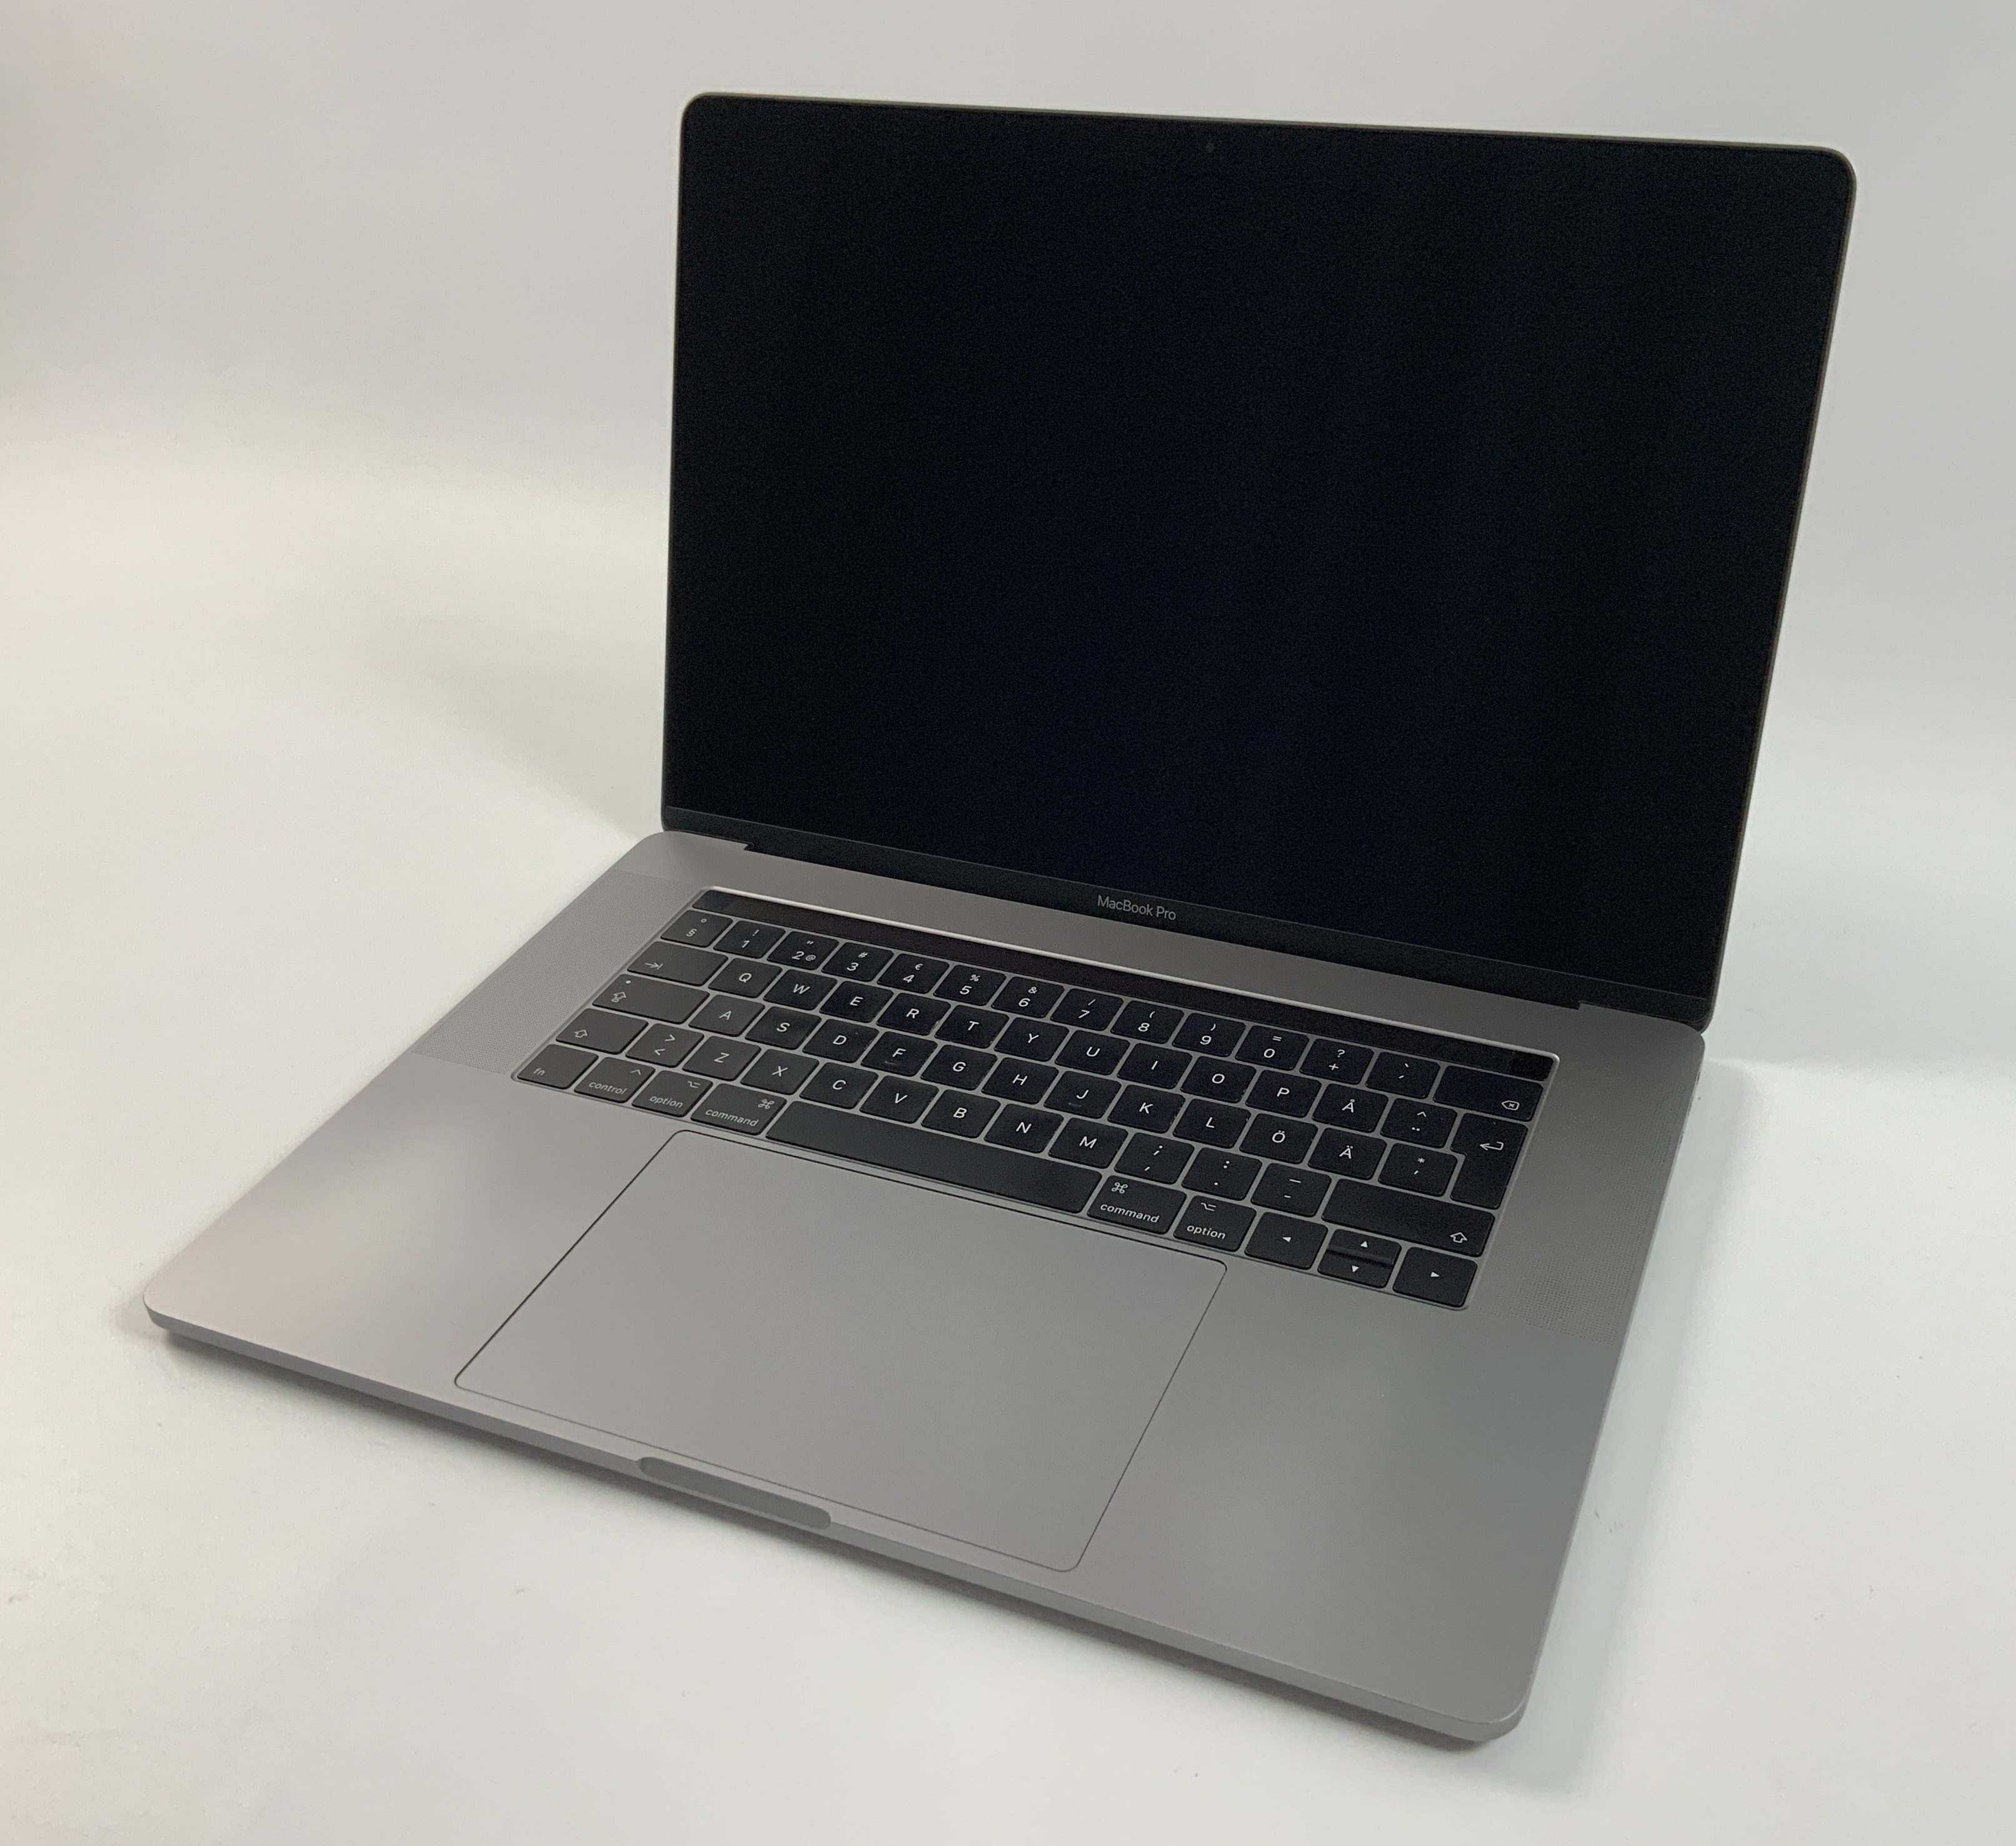 MacBook Pro 15" Touch Bar Late 2016 (Intel Quad-Core i7 2.9 GHz 16 GB RAM 1 TB SSD), Space Gray, Intel Quad-Core i7 2.9 GHz, 16 GB RAM, 1 TB SSD, immagine 1